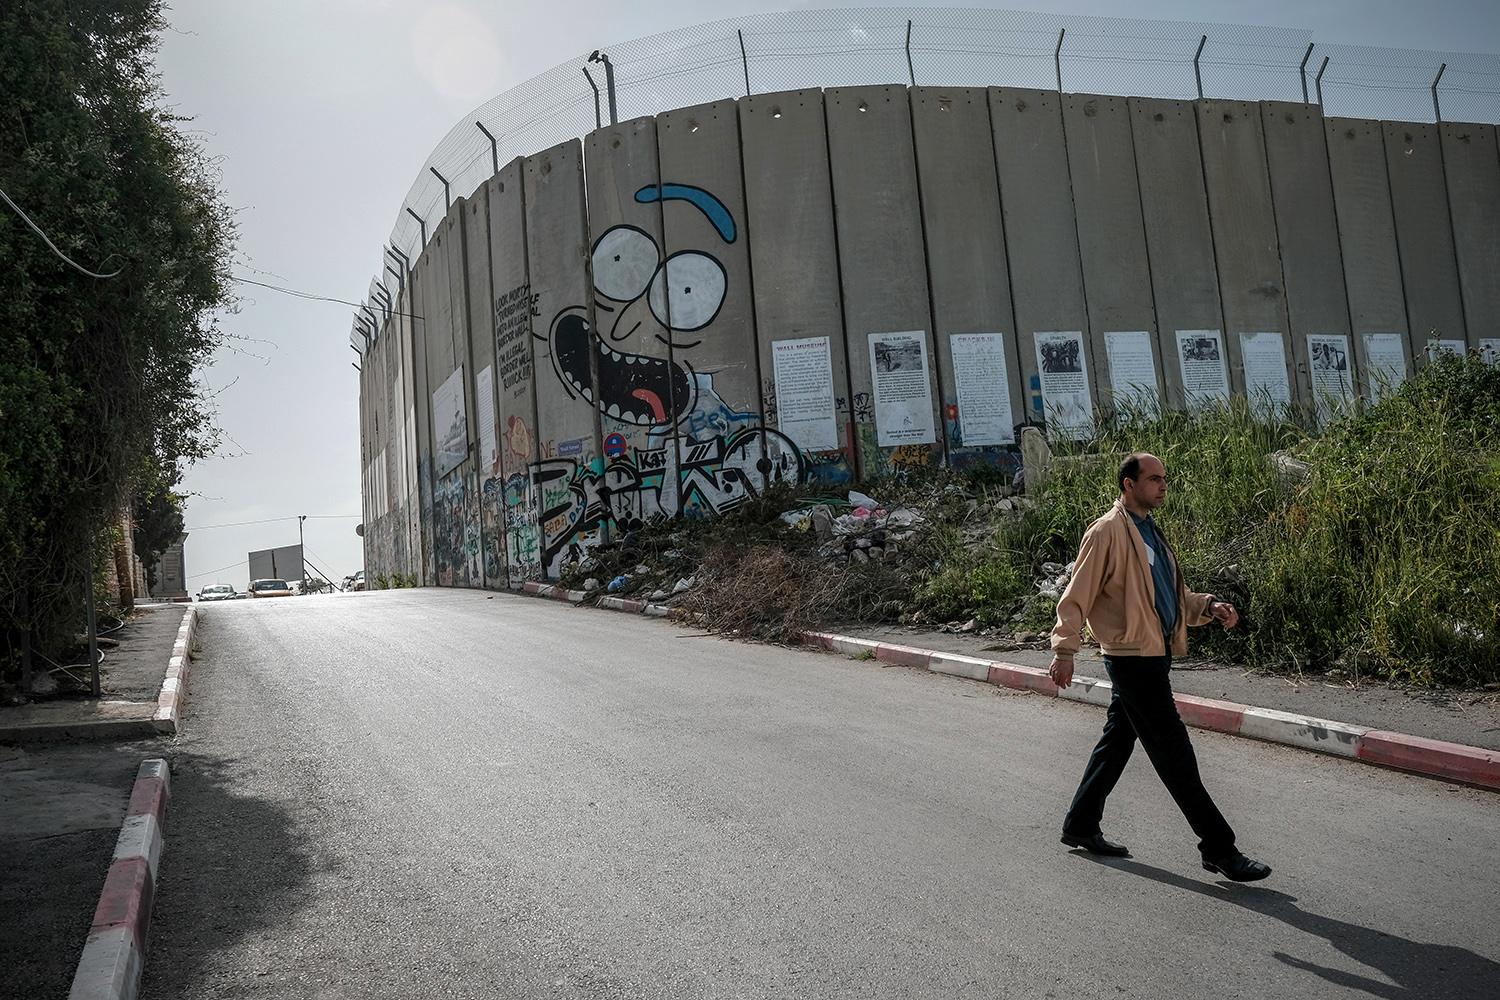  Separation wall, Bethlehem, West Bank (Palestine). 